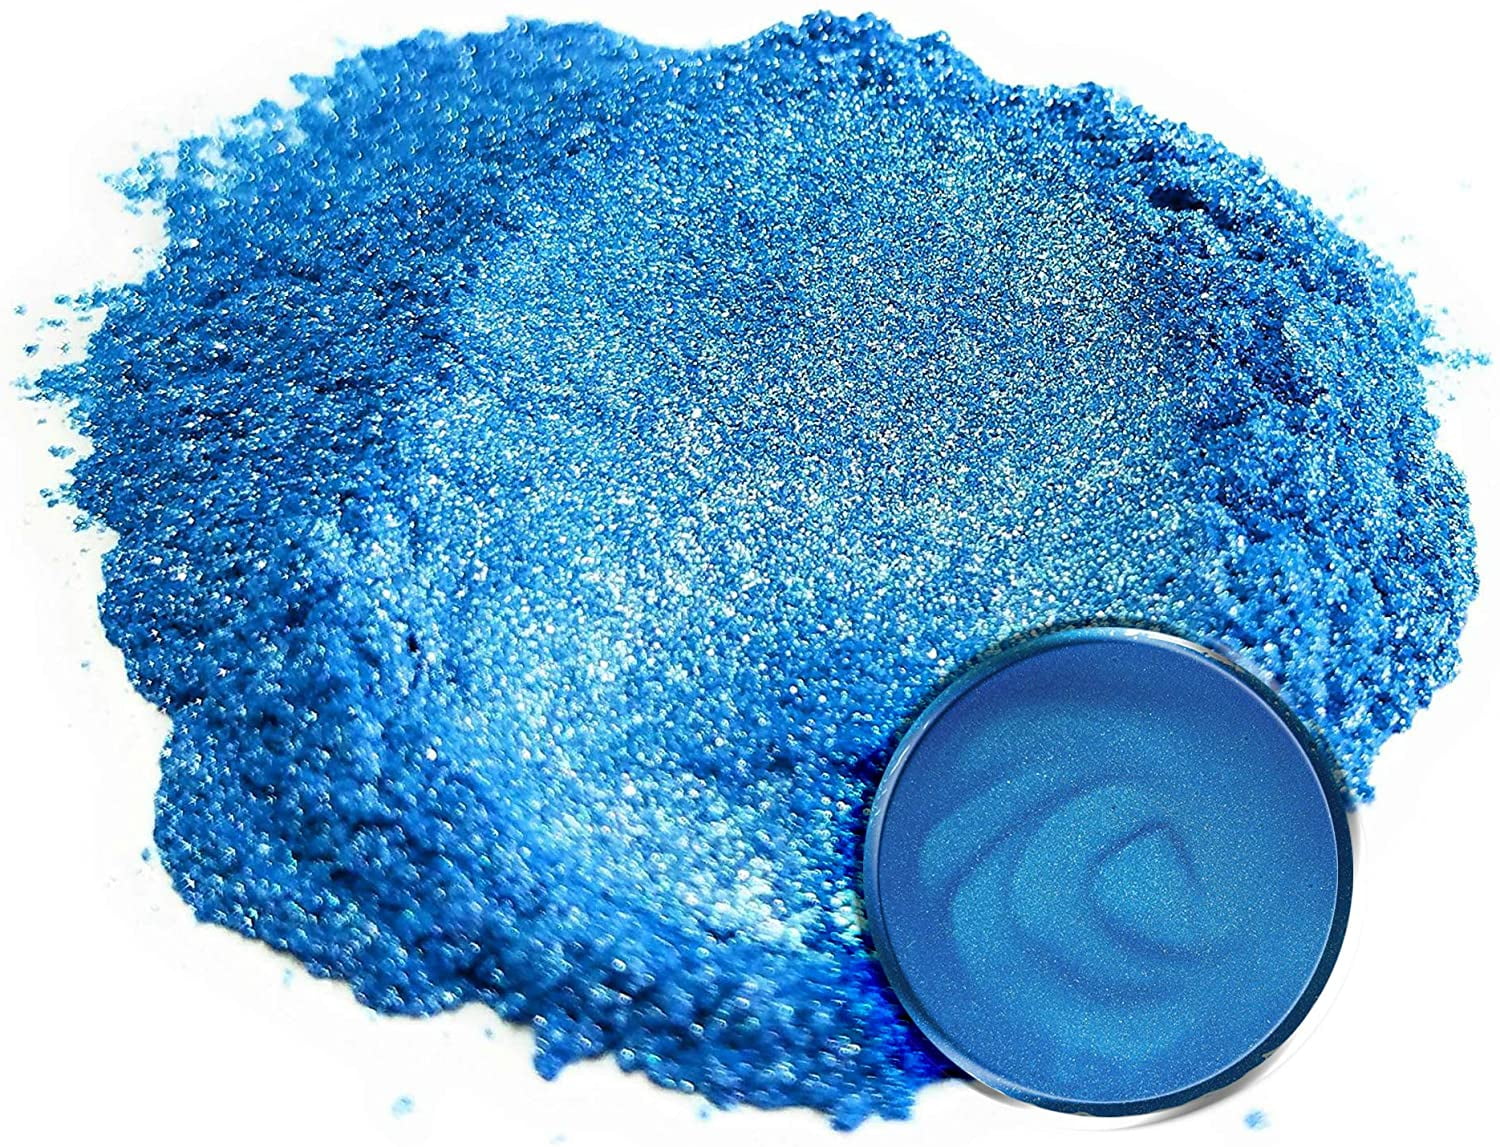 Eye Candy Premium Mica Powder Pigment “Soma” (50g) Multipurpose DIY Arts  and Crafts Additive | Natural Bath Bombs, Resin, Paint, Epoxy, Soap, Nail